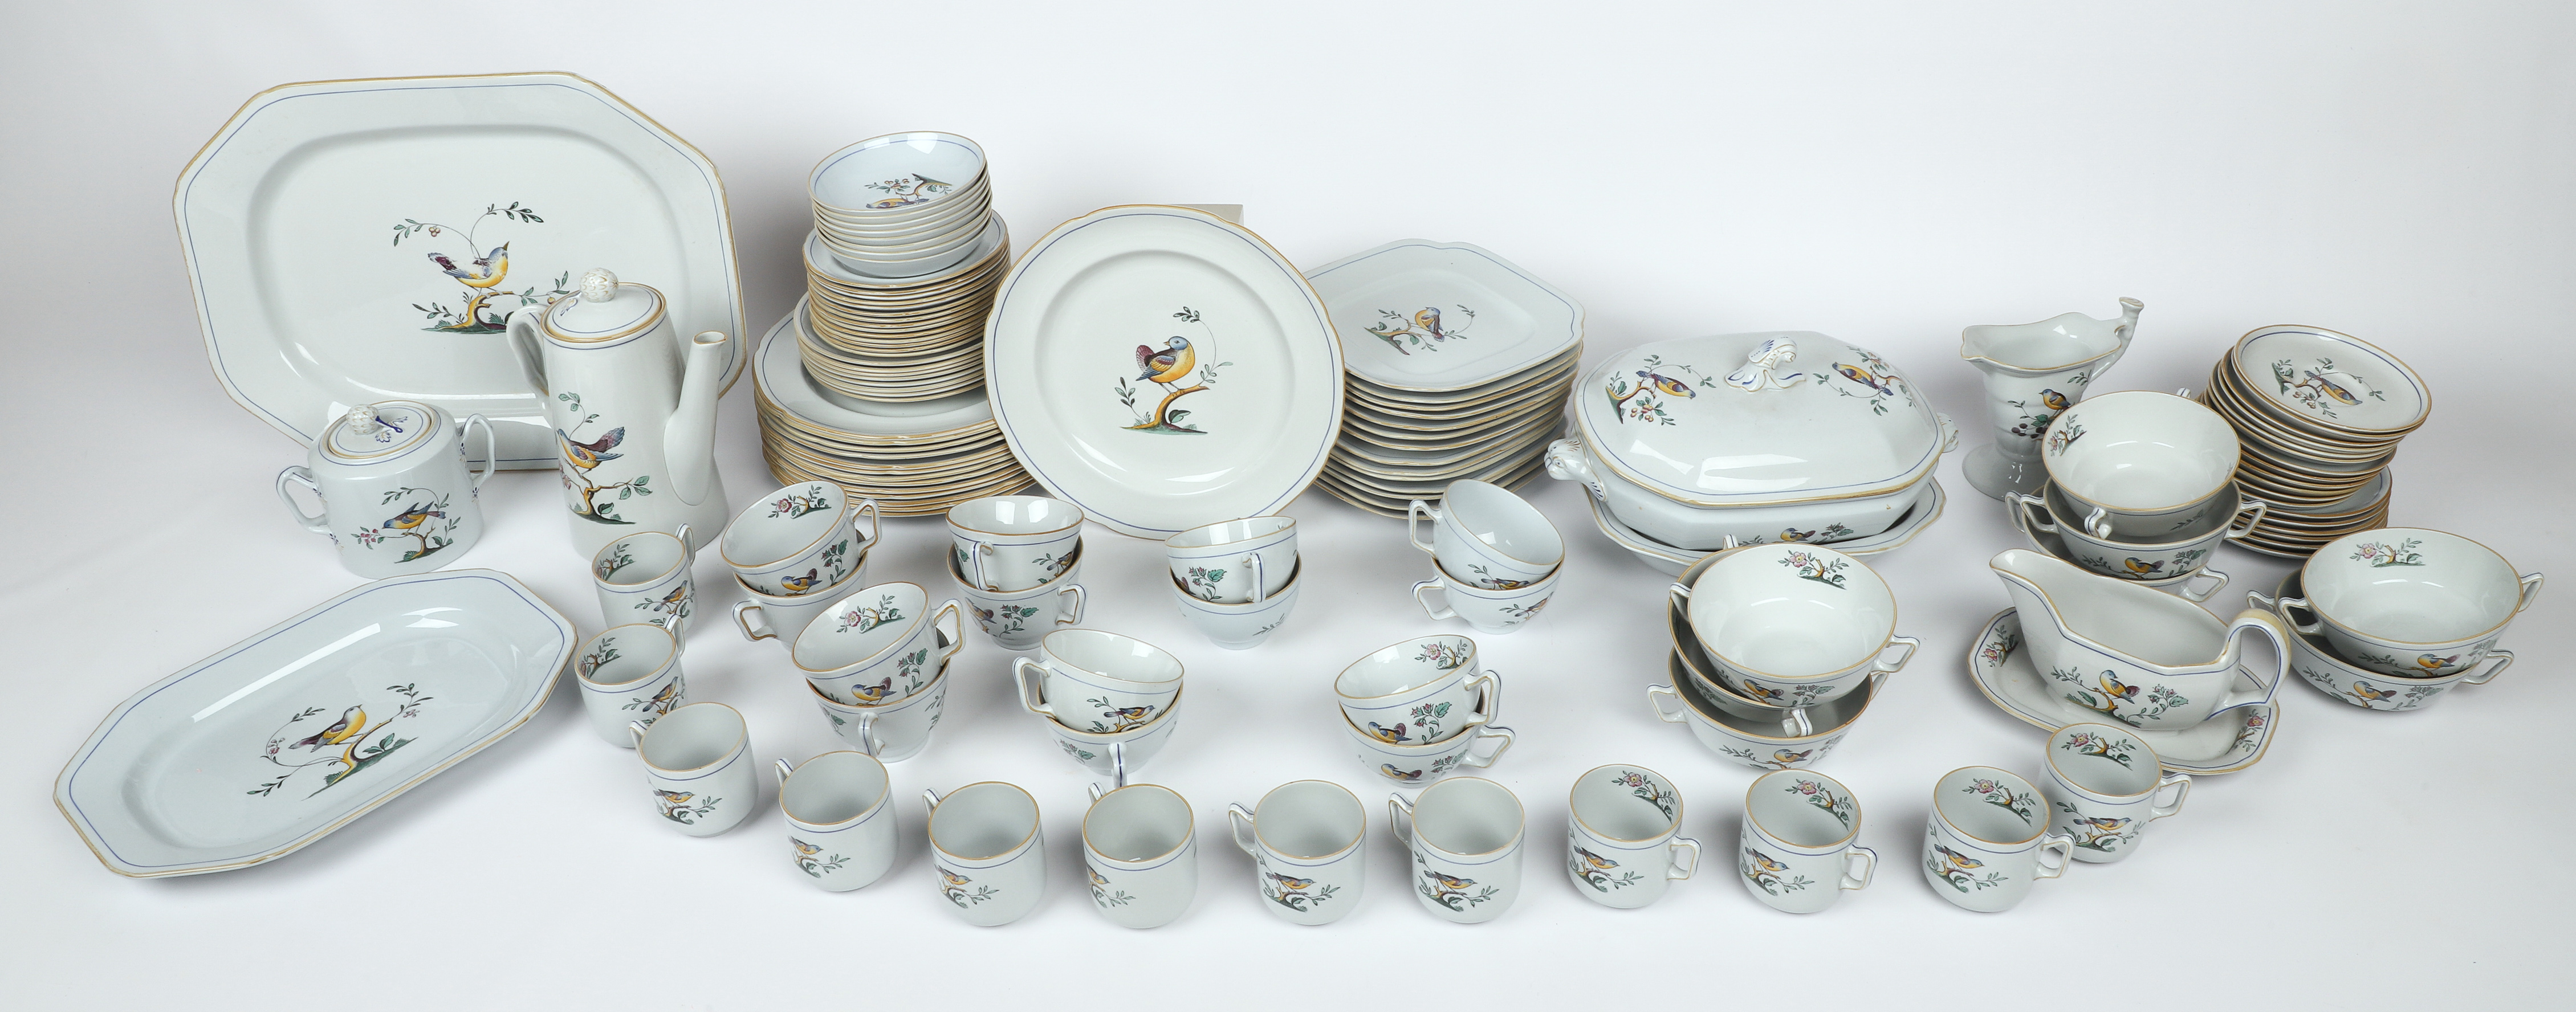  118 Pcs Spode porcelain dinnerware  3ca472